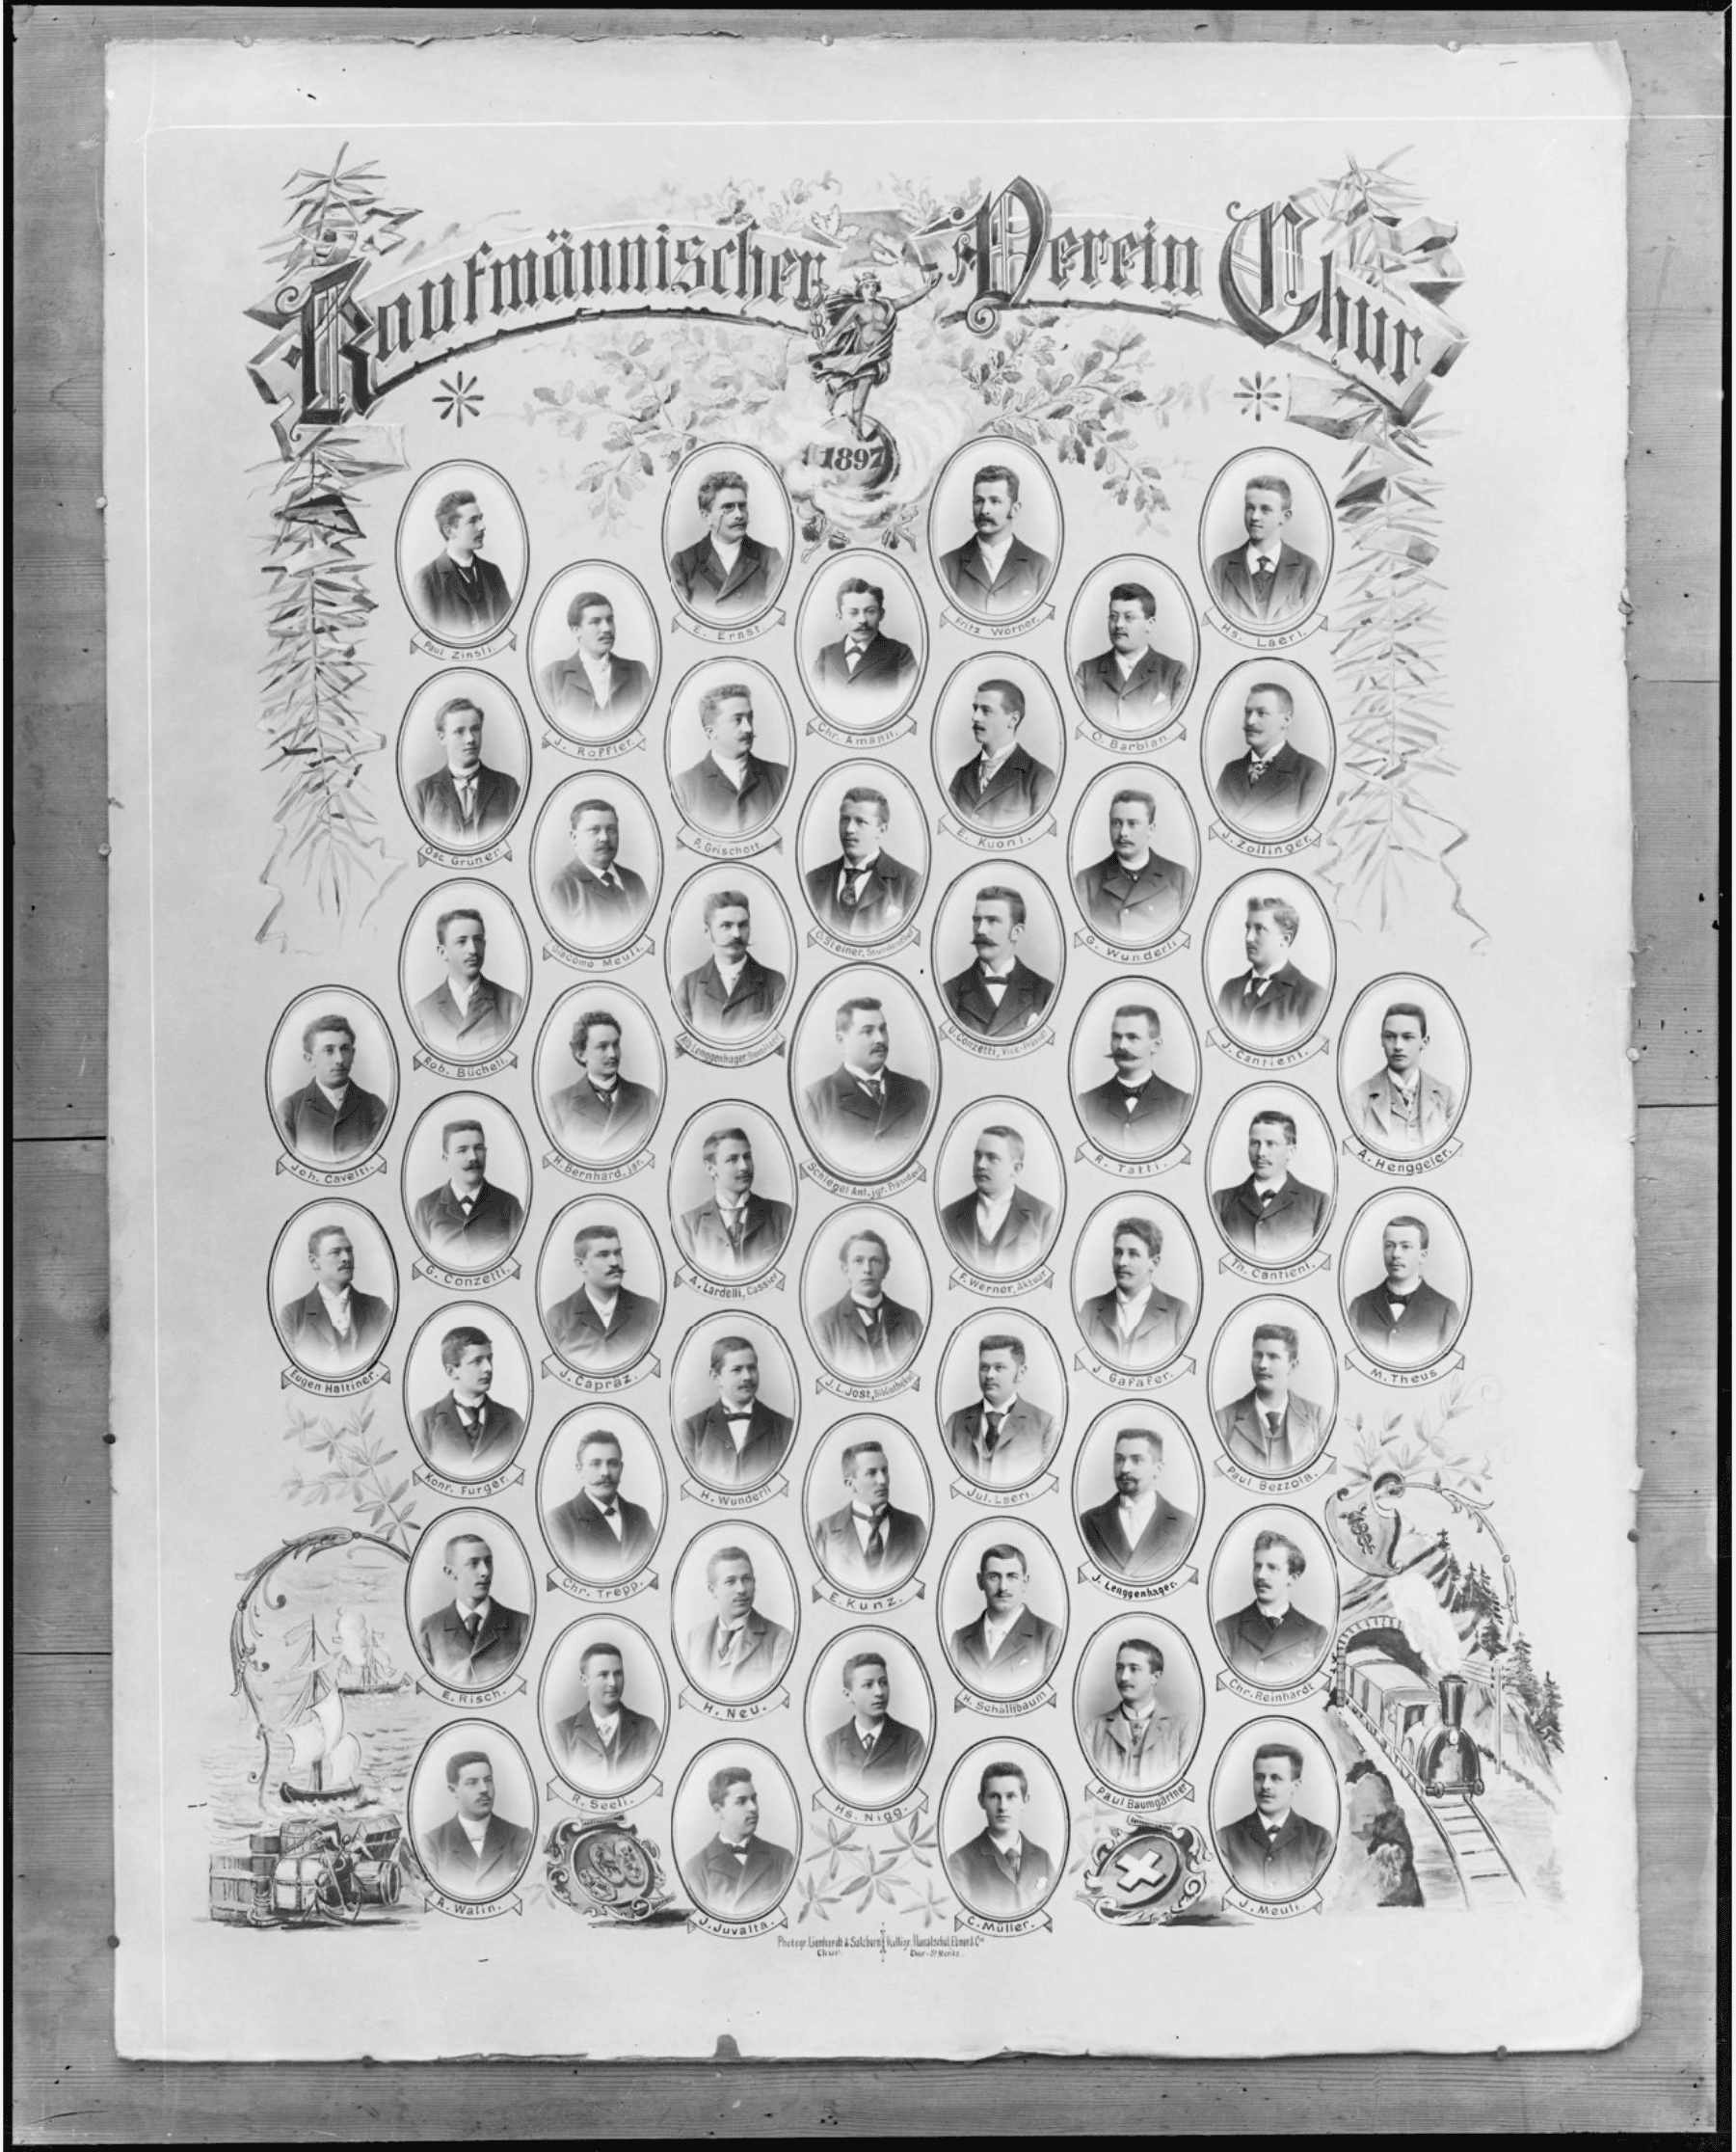 1897-bd-kaufmaeennischer-verein-chur.png